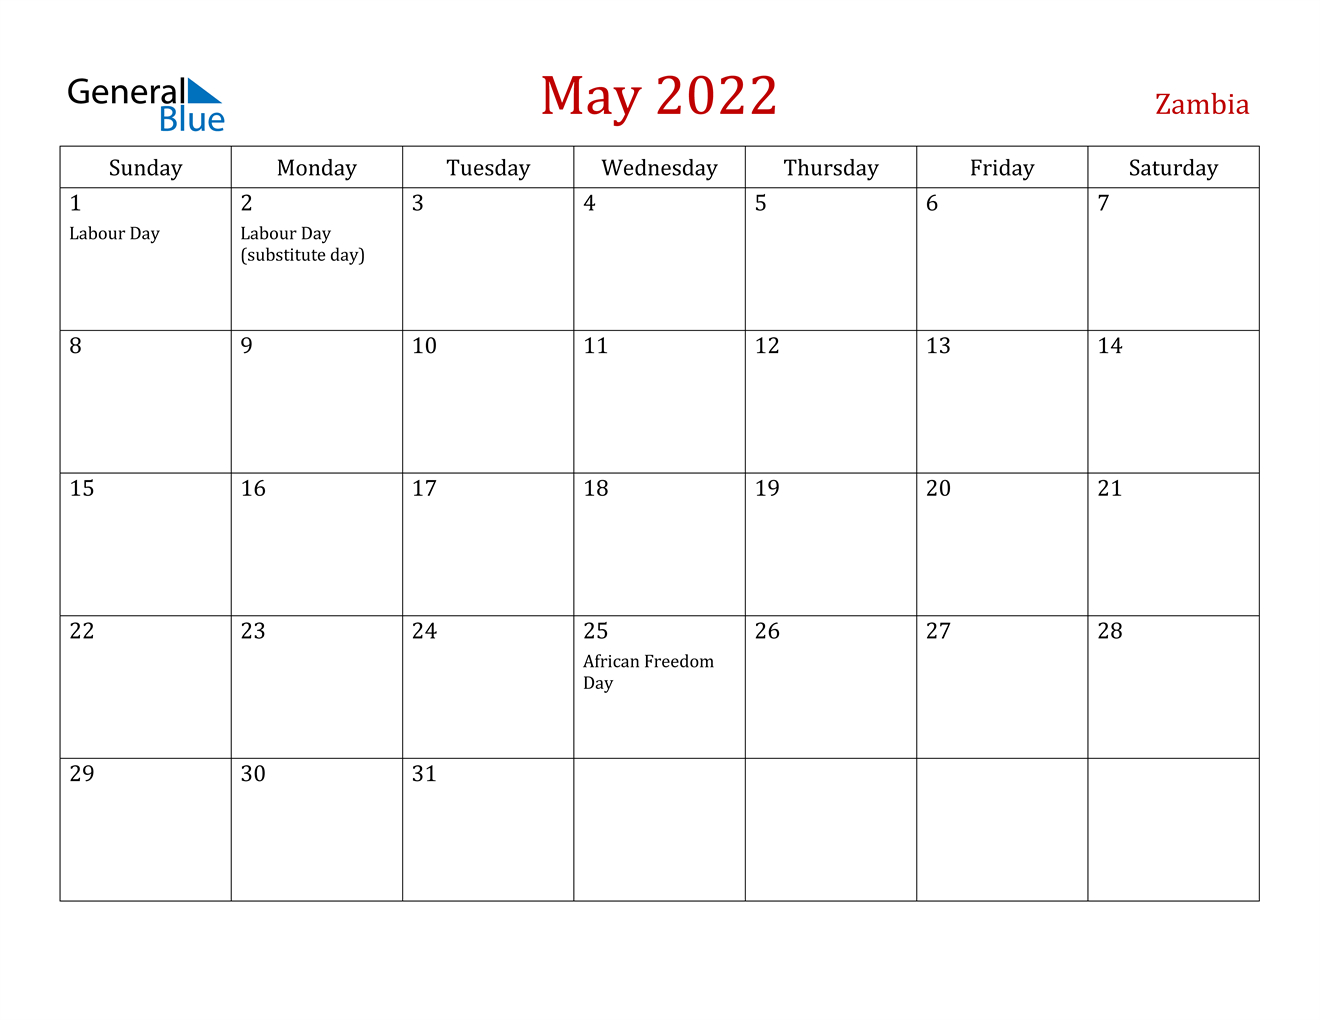 May 2022 Calendar - Zambia